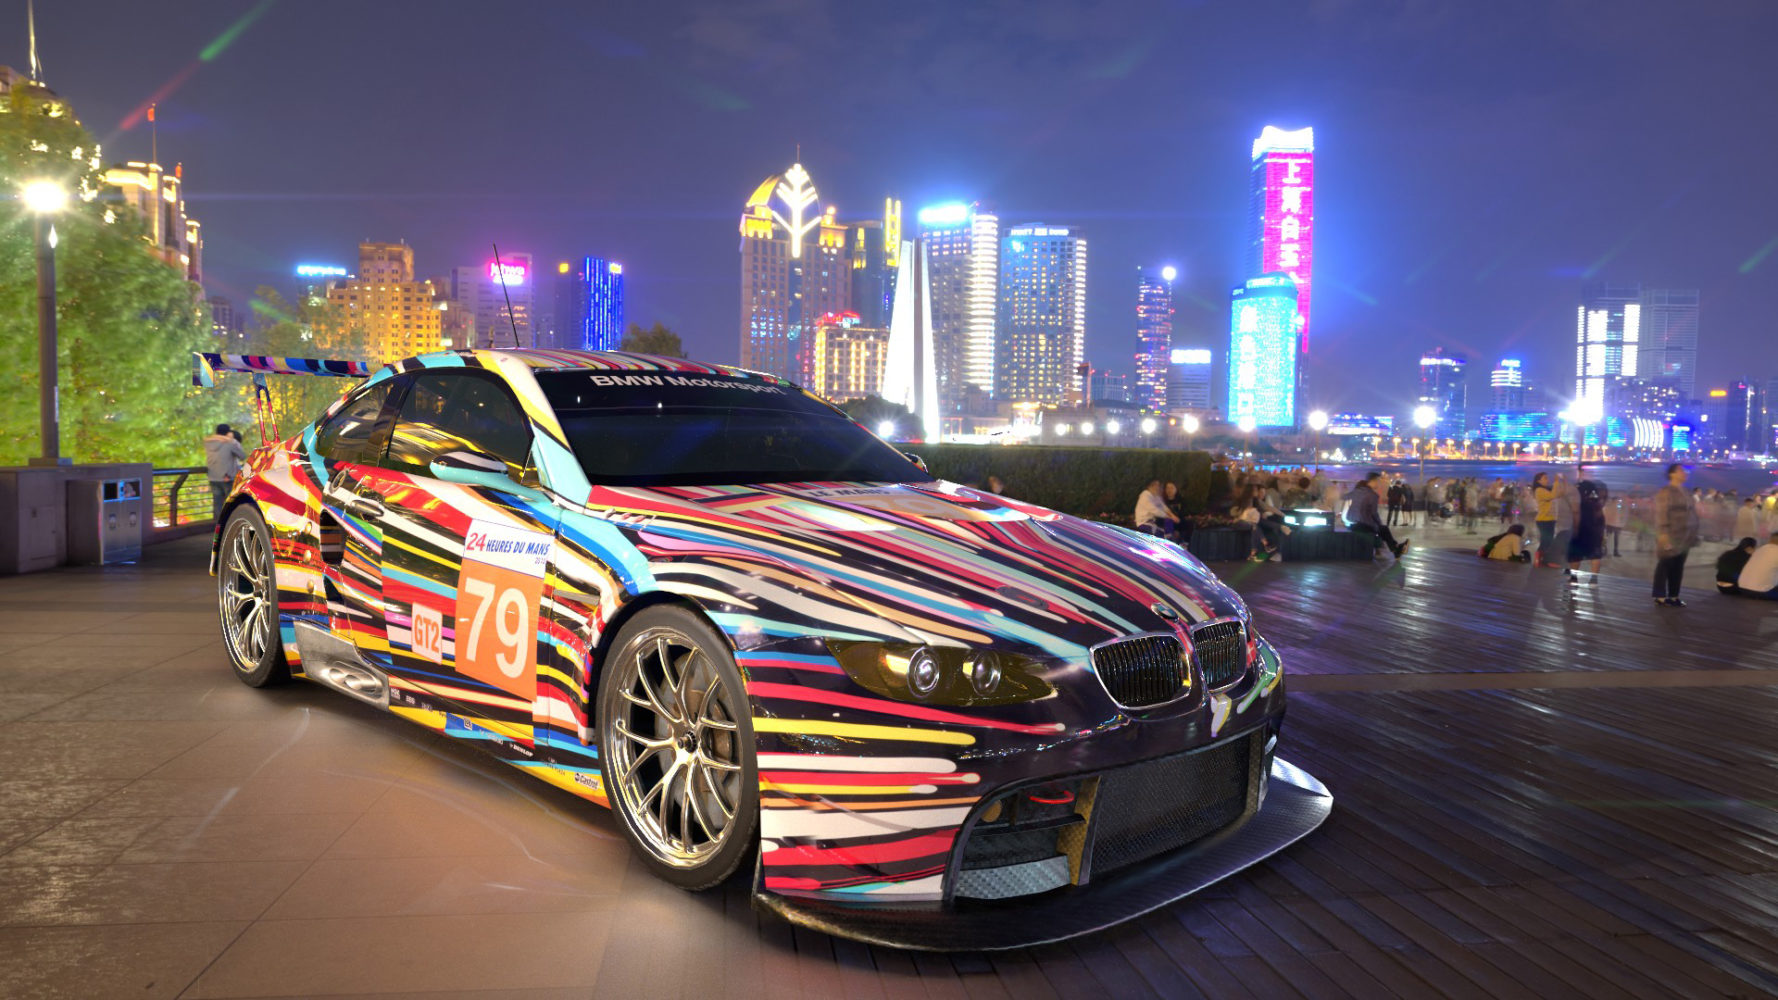 Jeff Koons for BMW Art Cars